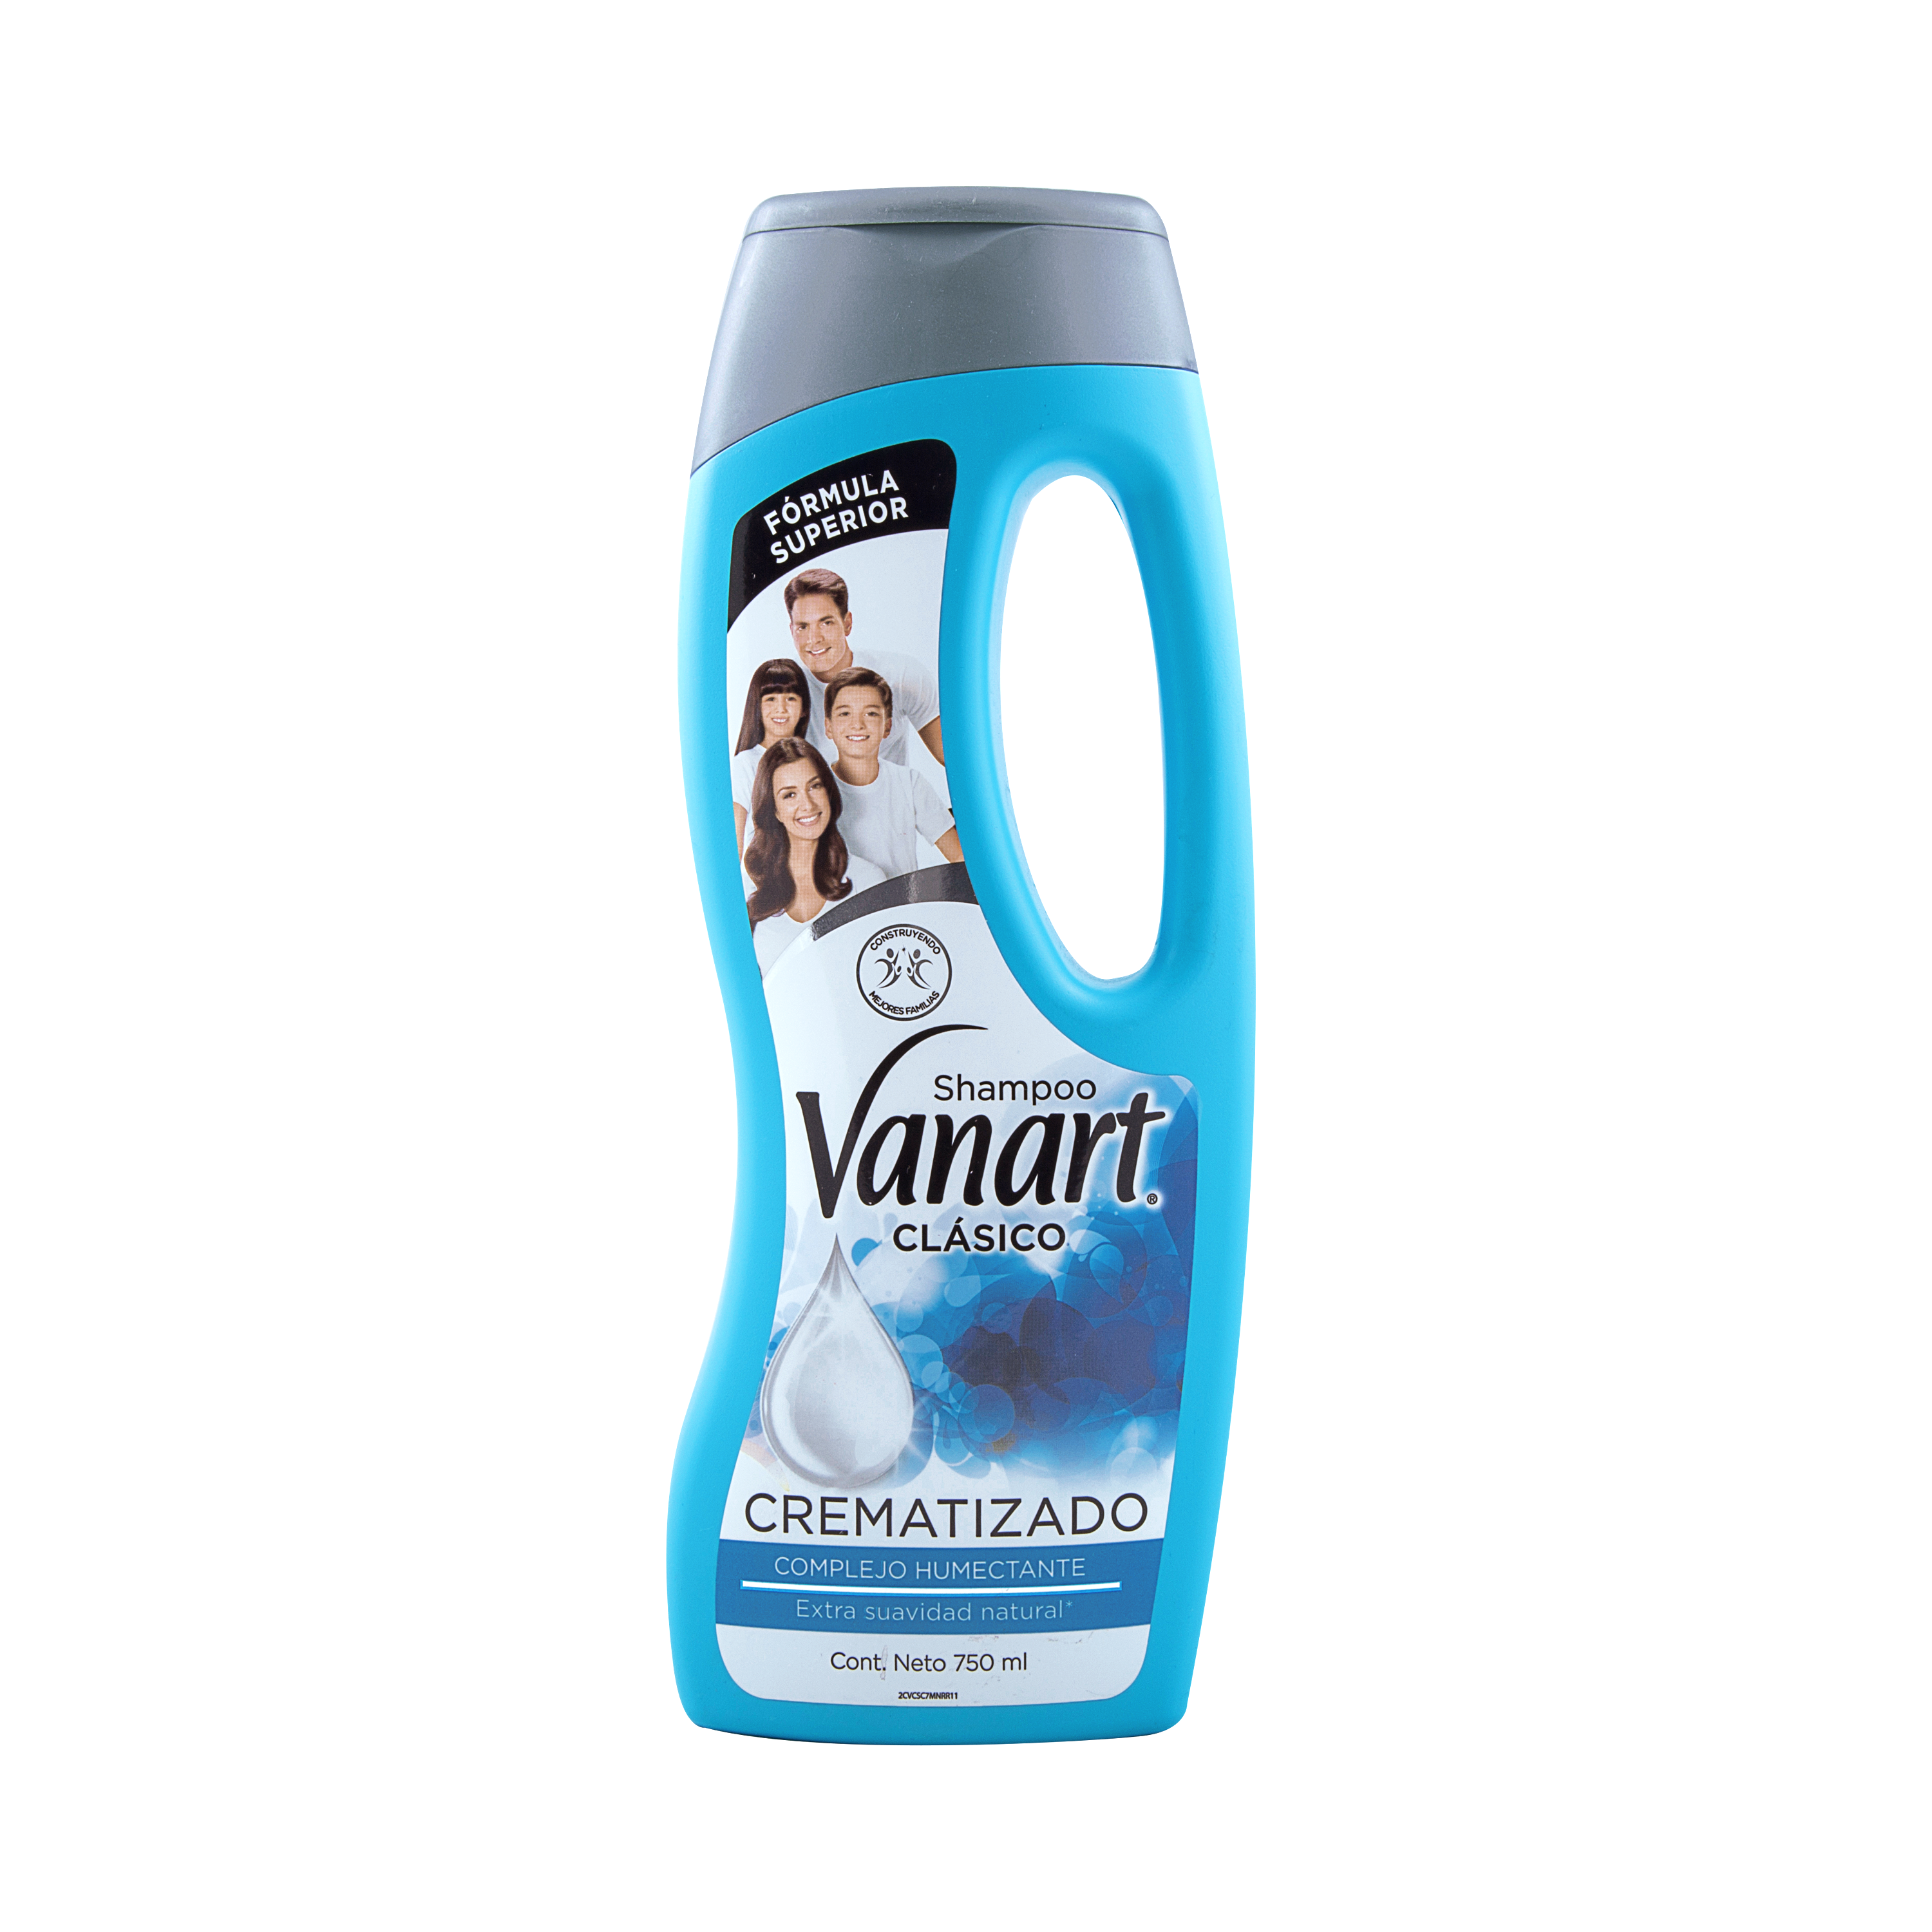 Vanart Clásico Sh Crematizado 750 ml